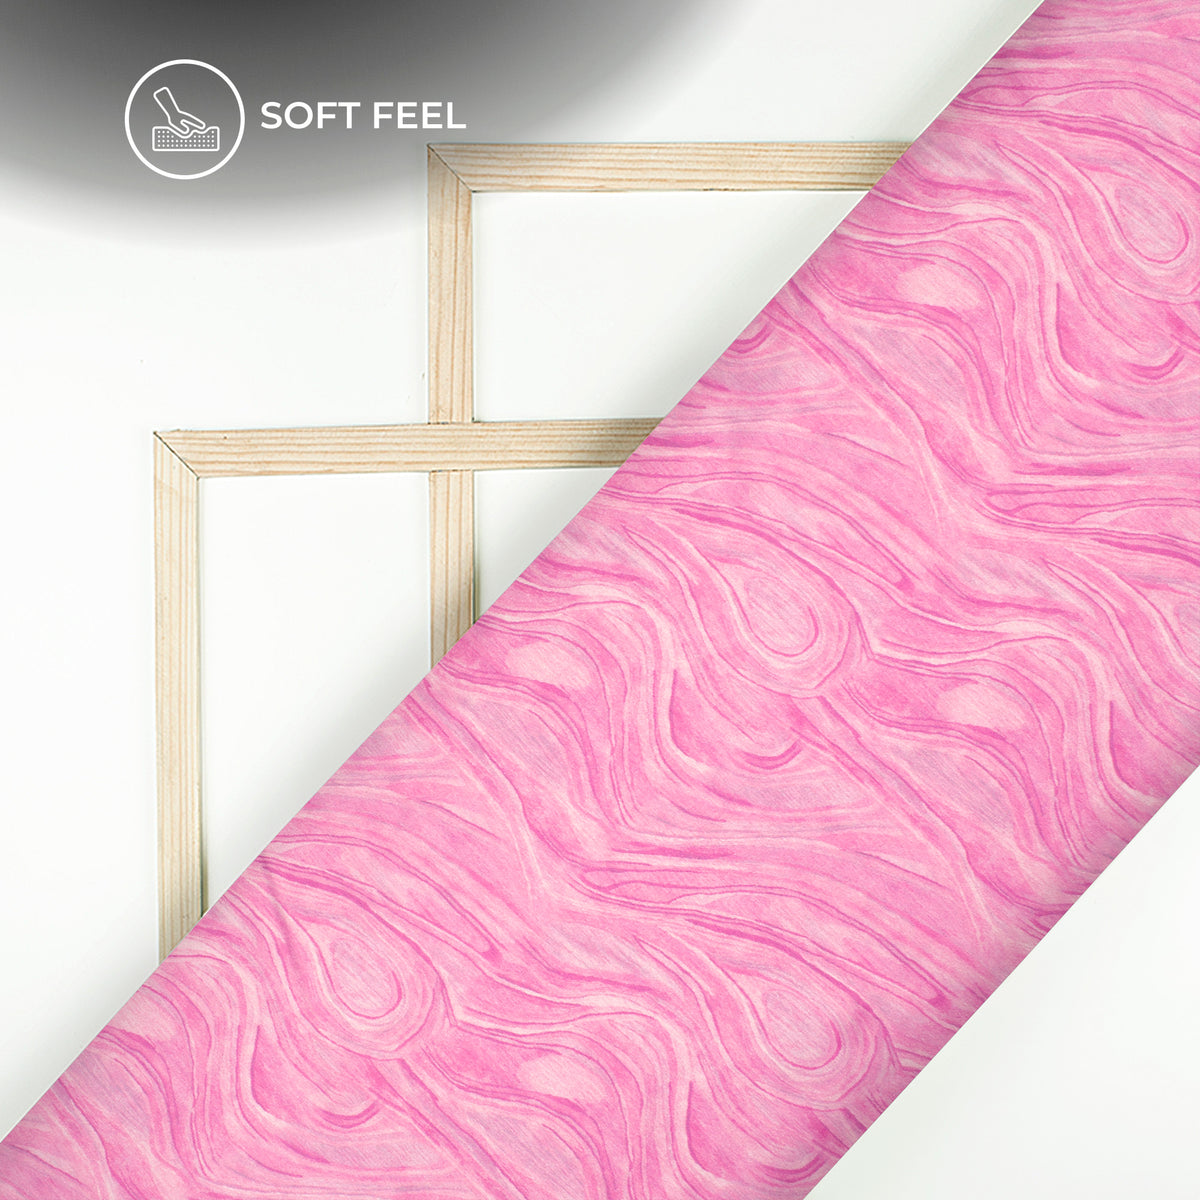 Fuscia Pink Abstract Digital Print Japan Satin Fabric